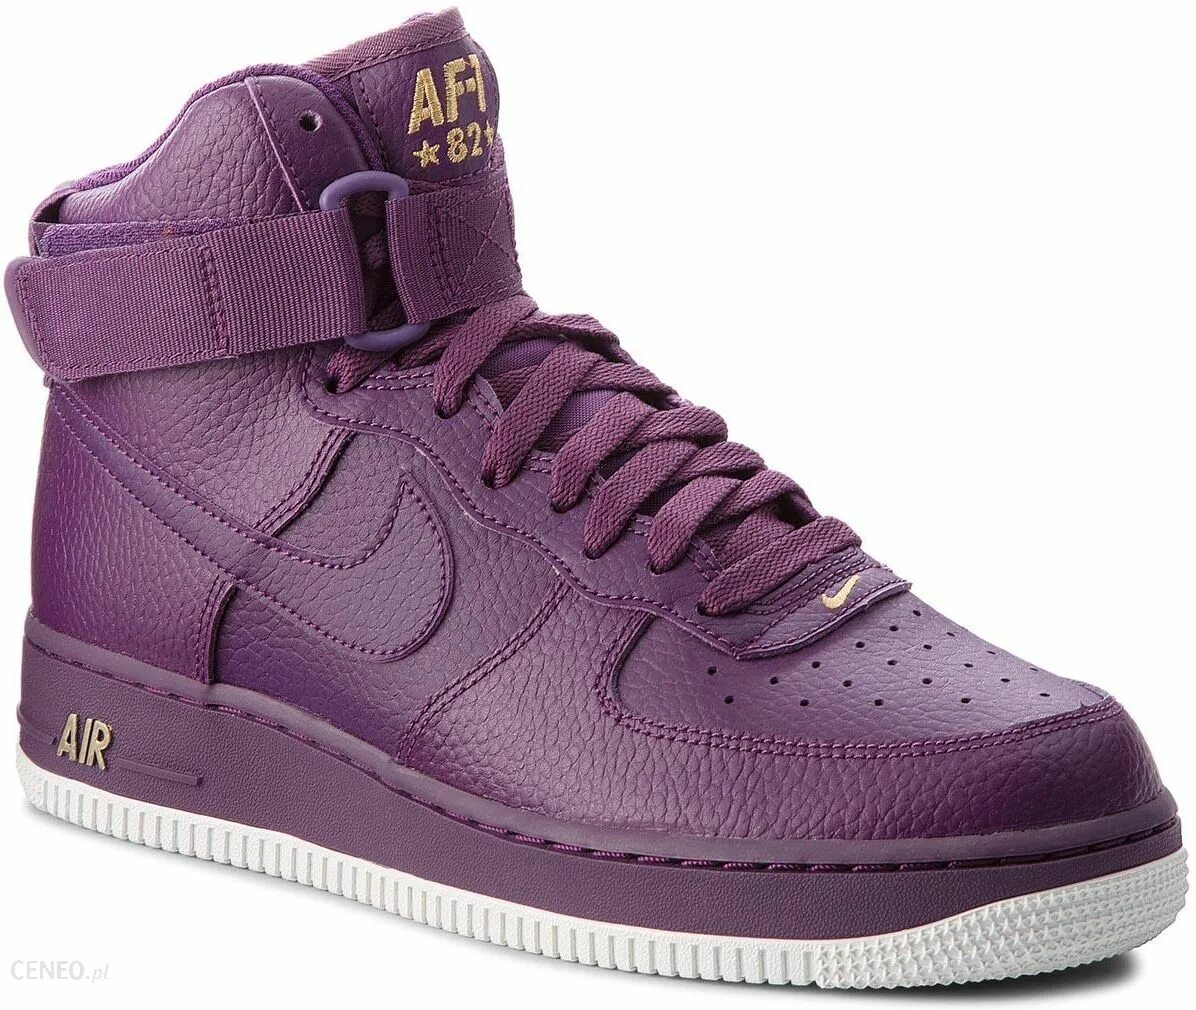 Nike Air Force 1 High Purple. Nike Air Force 1 High фиолетовые. Найк Форс 1 Purple. Nike Air Air Force 1 фиолетовые.